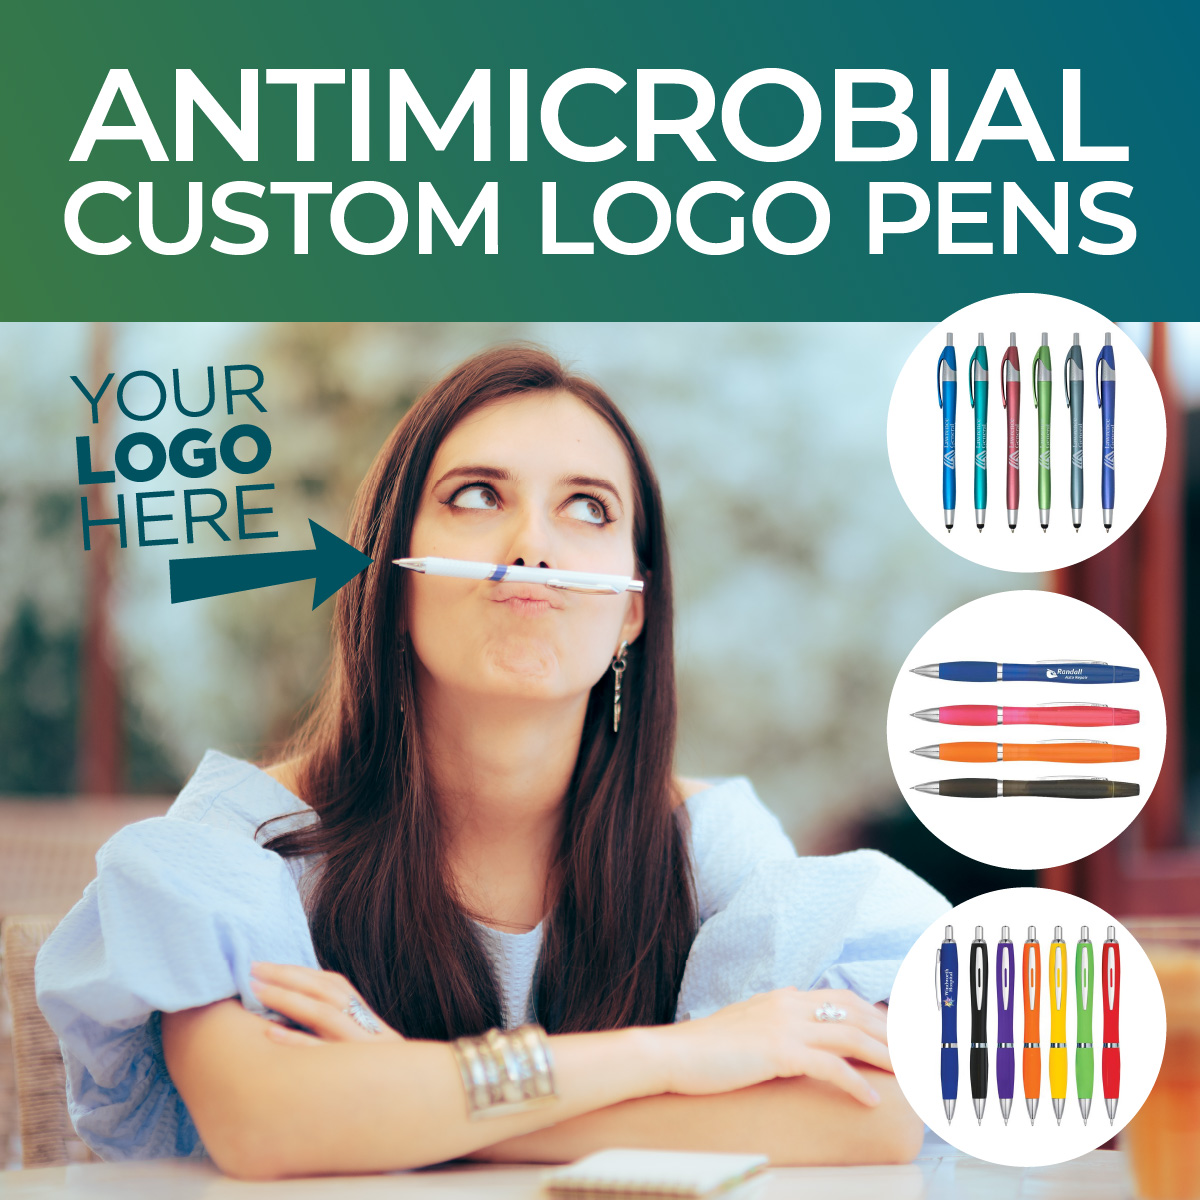 Antimicrobial custom logo pens